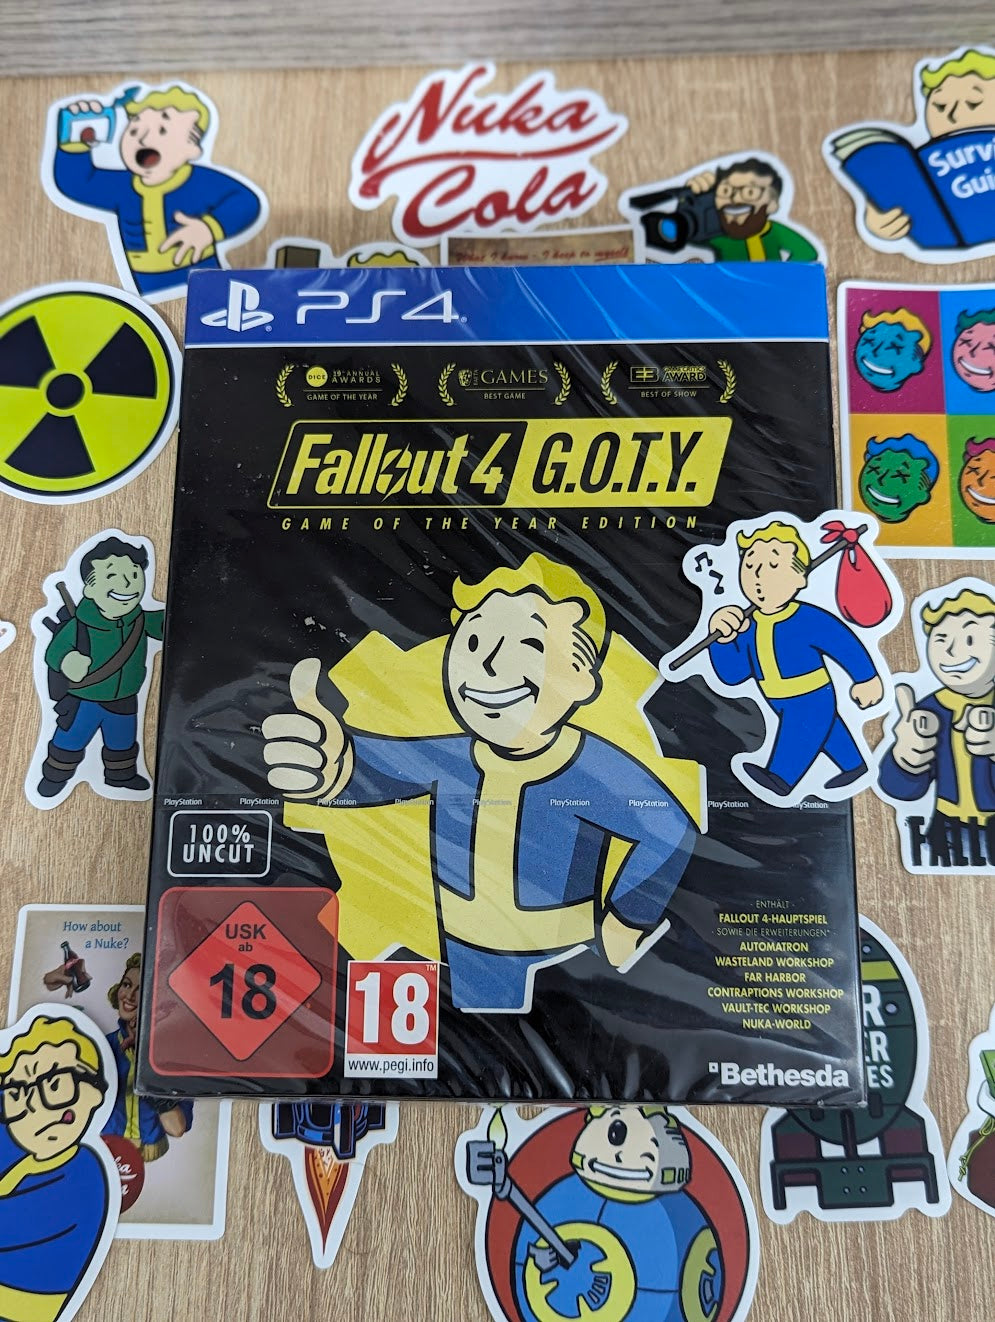 Fallout 4 | Steelbook | 25th Anniversary Edition